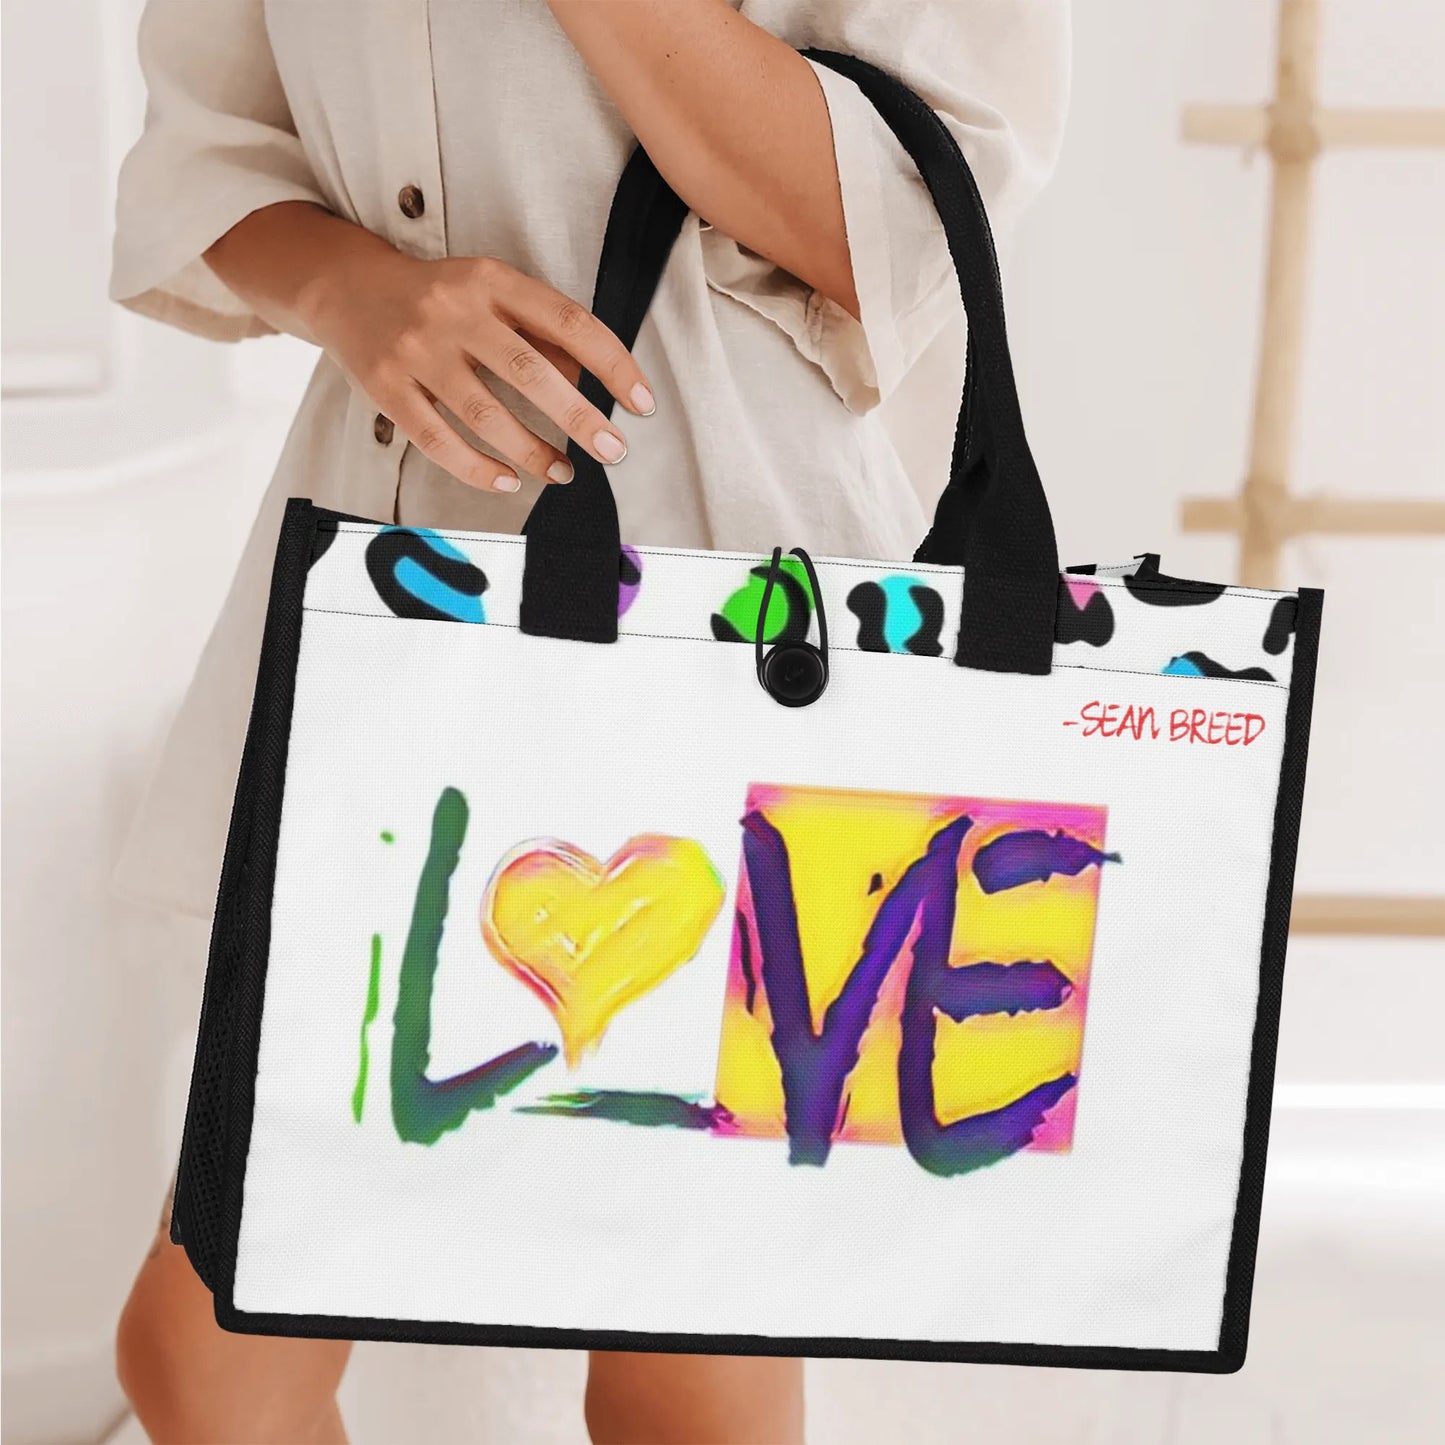 Sean Breed LOVE Color Camo Canvas Tote Bag